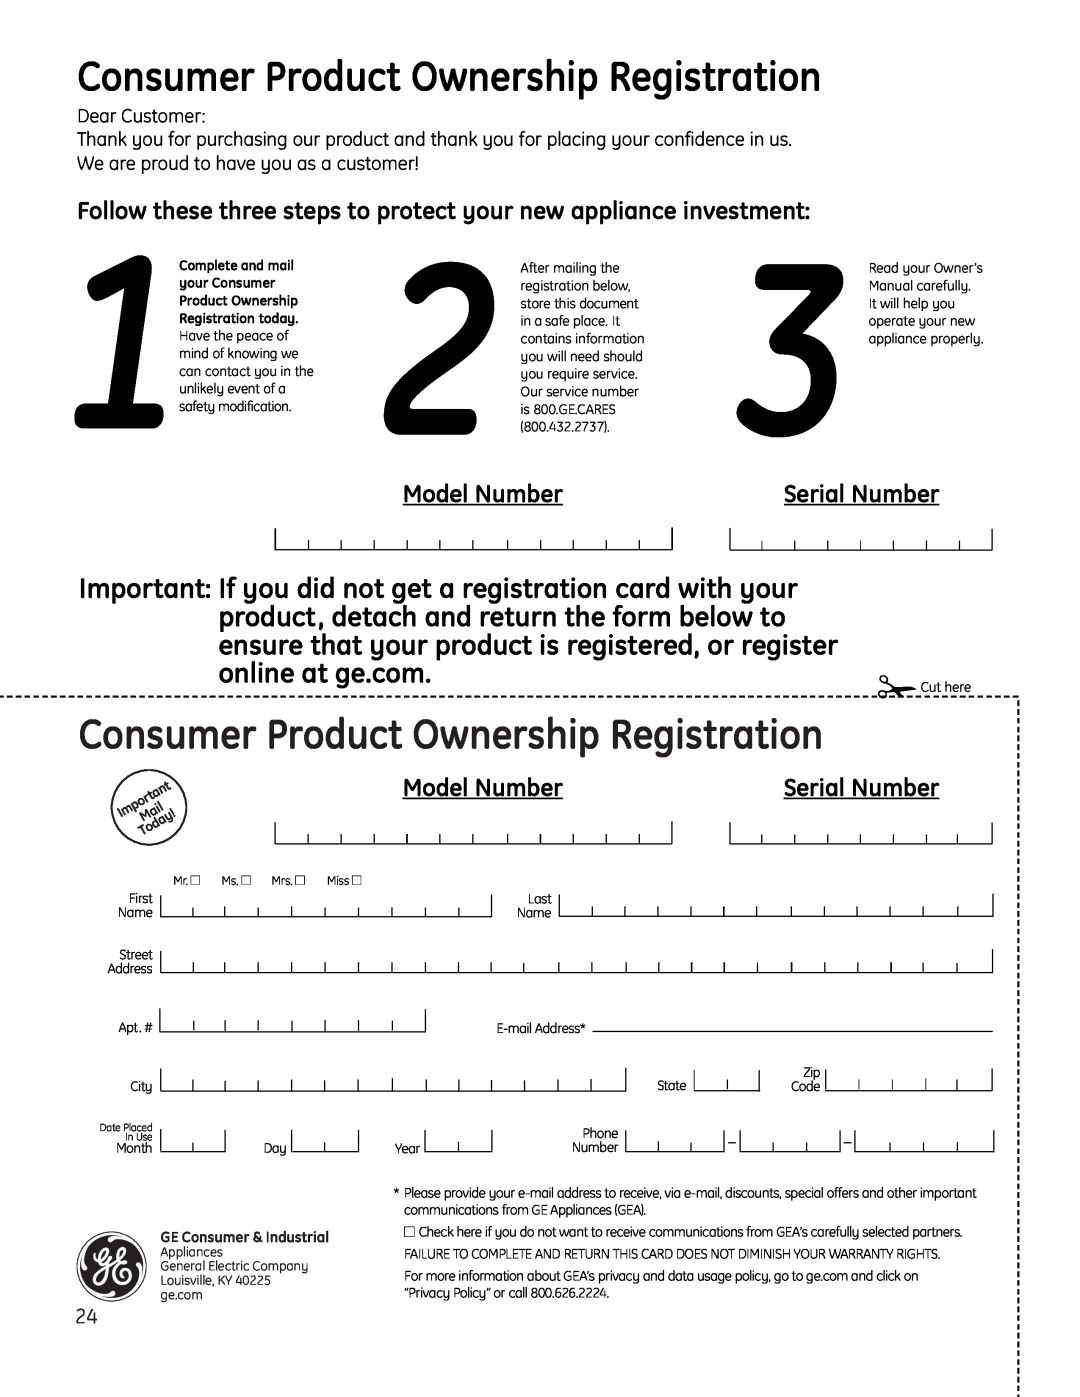 GE JP256 installation instructions Consumer Product Ownership Registration, online at ge.com, Model Number, Serial Number 